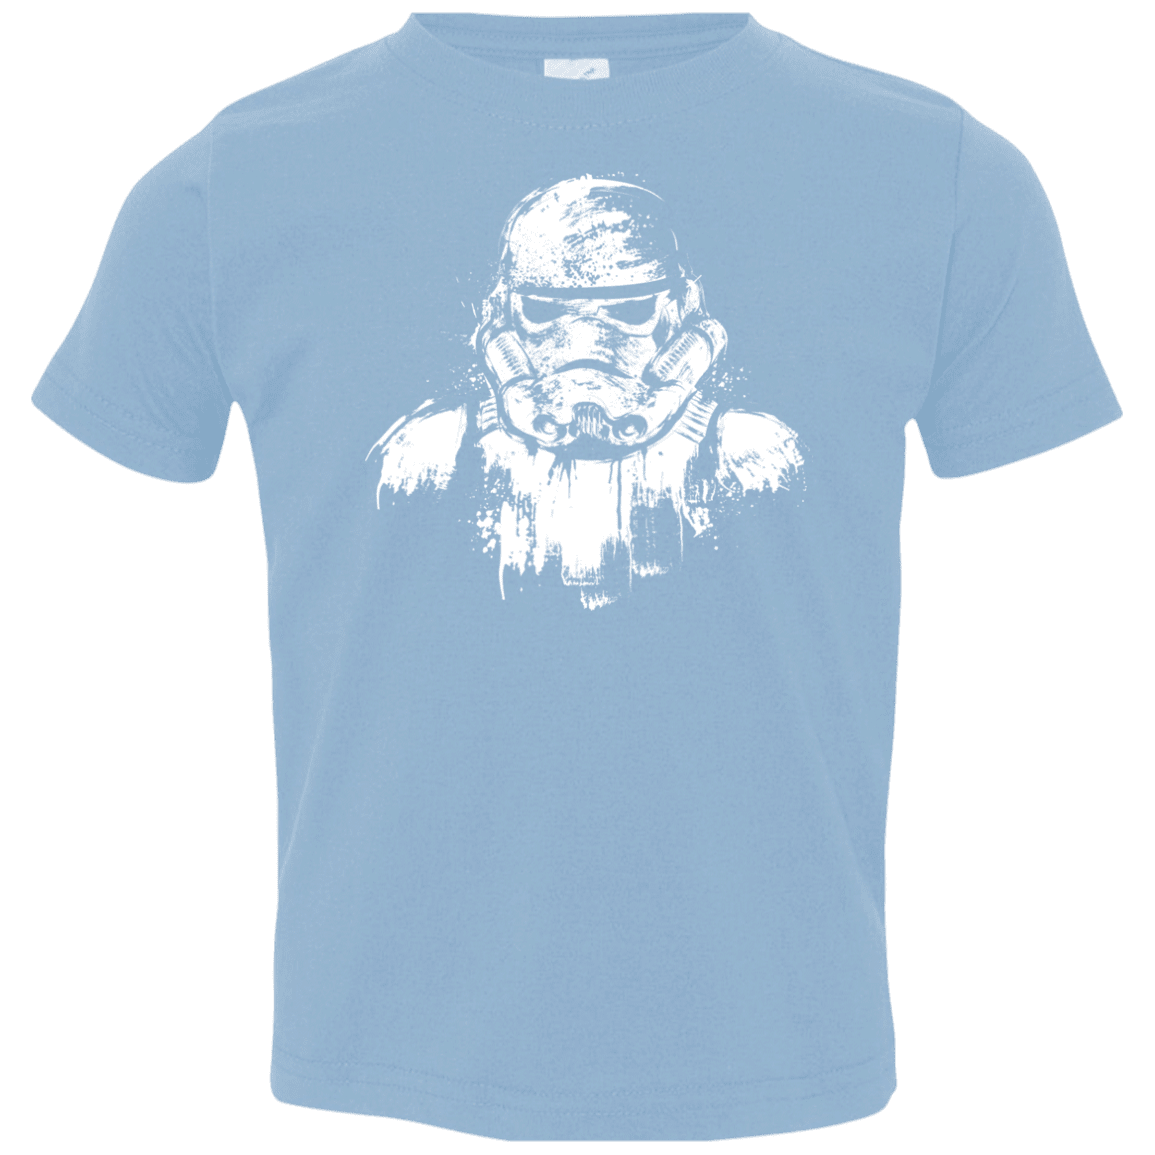 T-Shirts Light Blue / 2T STORMTROOPER ARMOR Toddler Premium T-Shirt